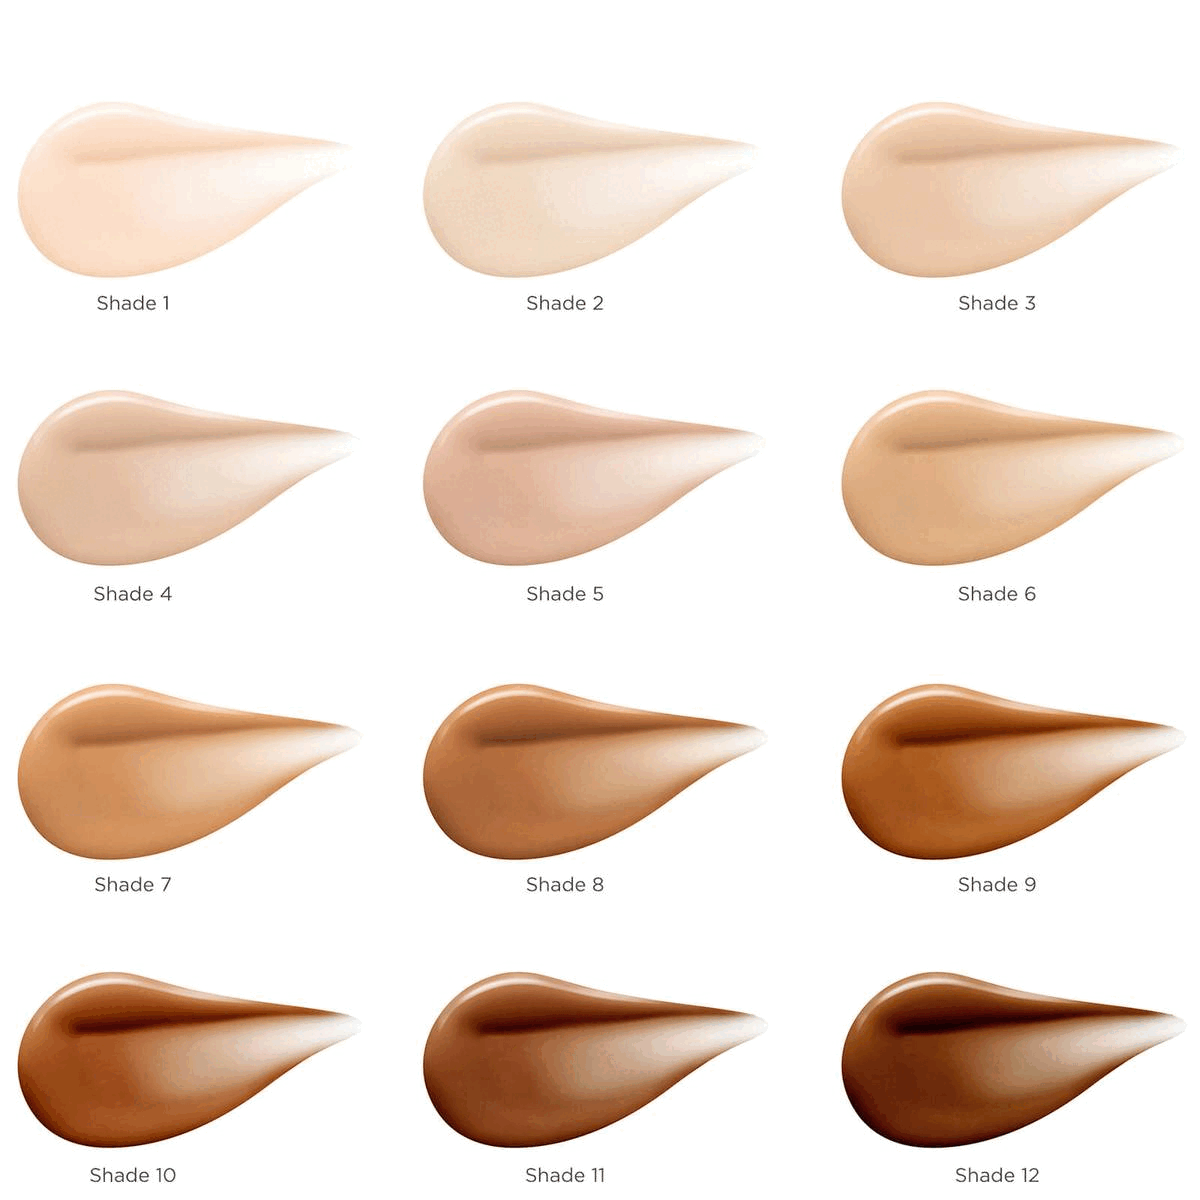 Foundation shades chart. Hand models wearing foundation shades